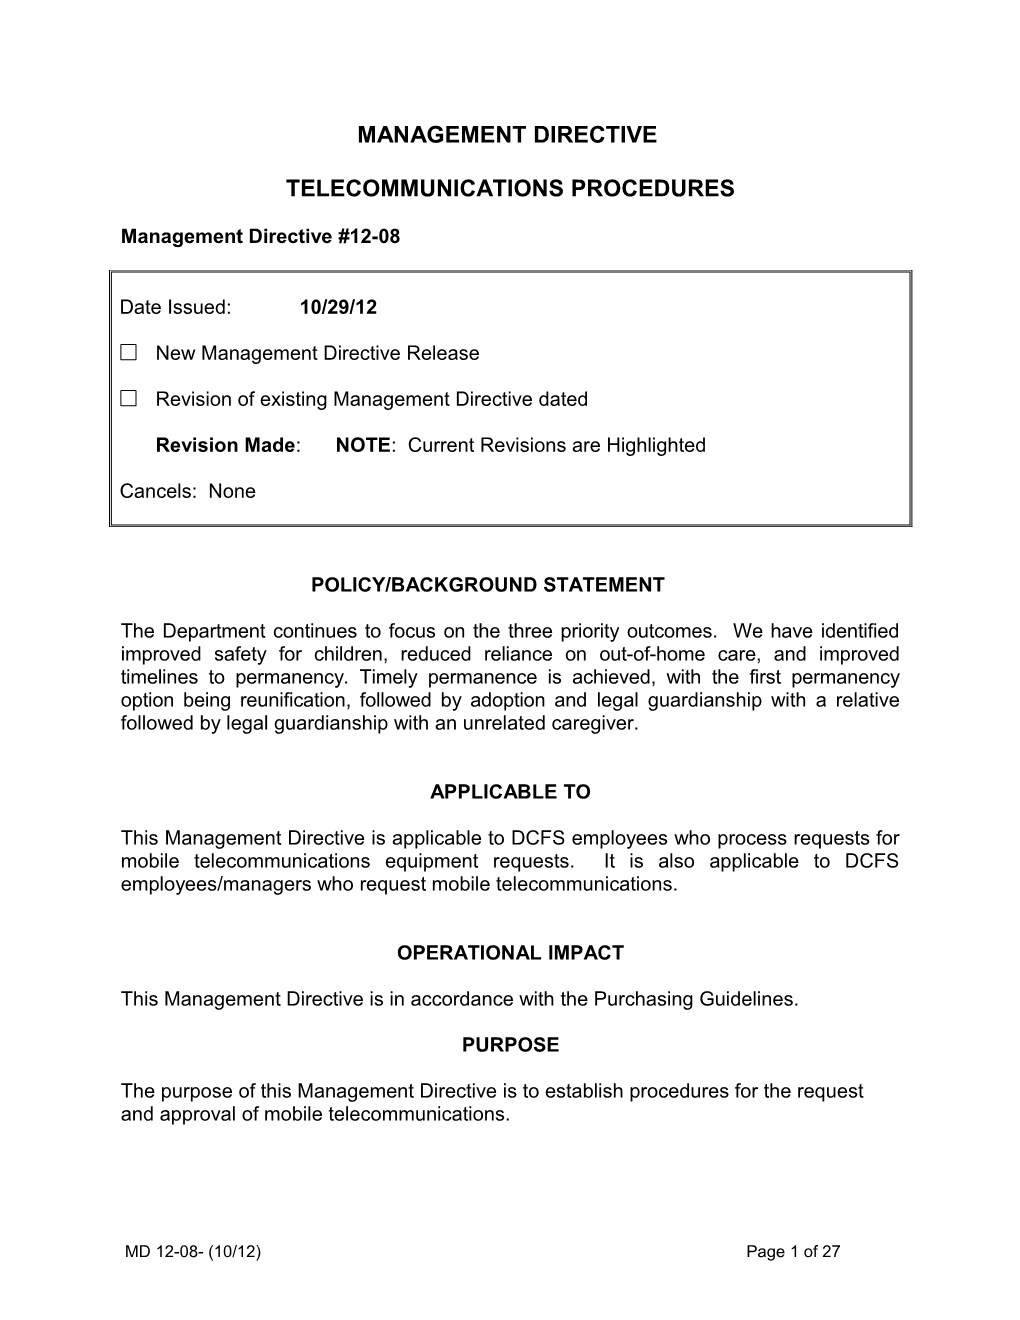 MD 12-08, Telecommunications Procedures